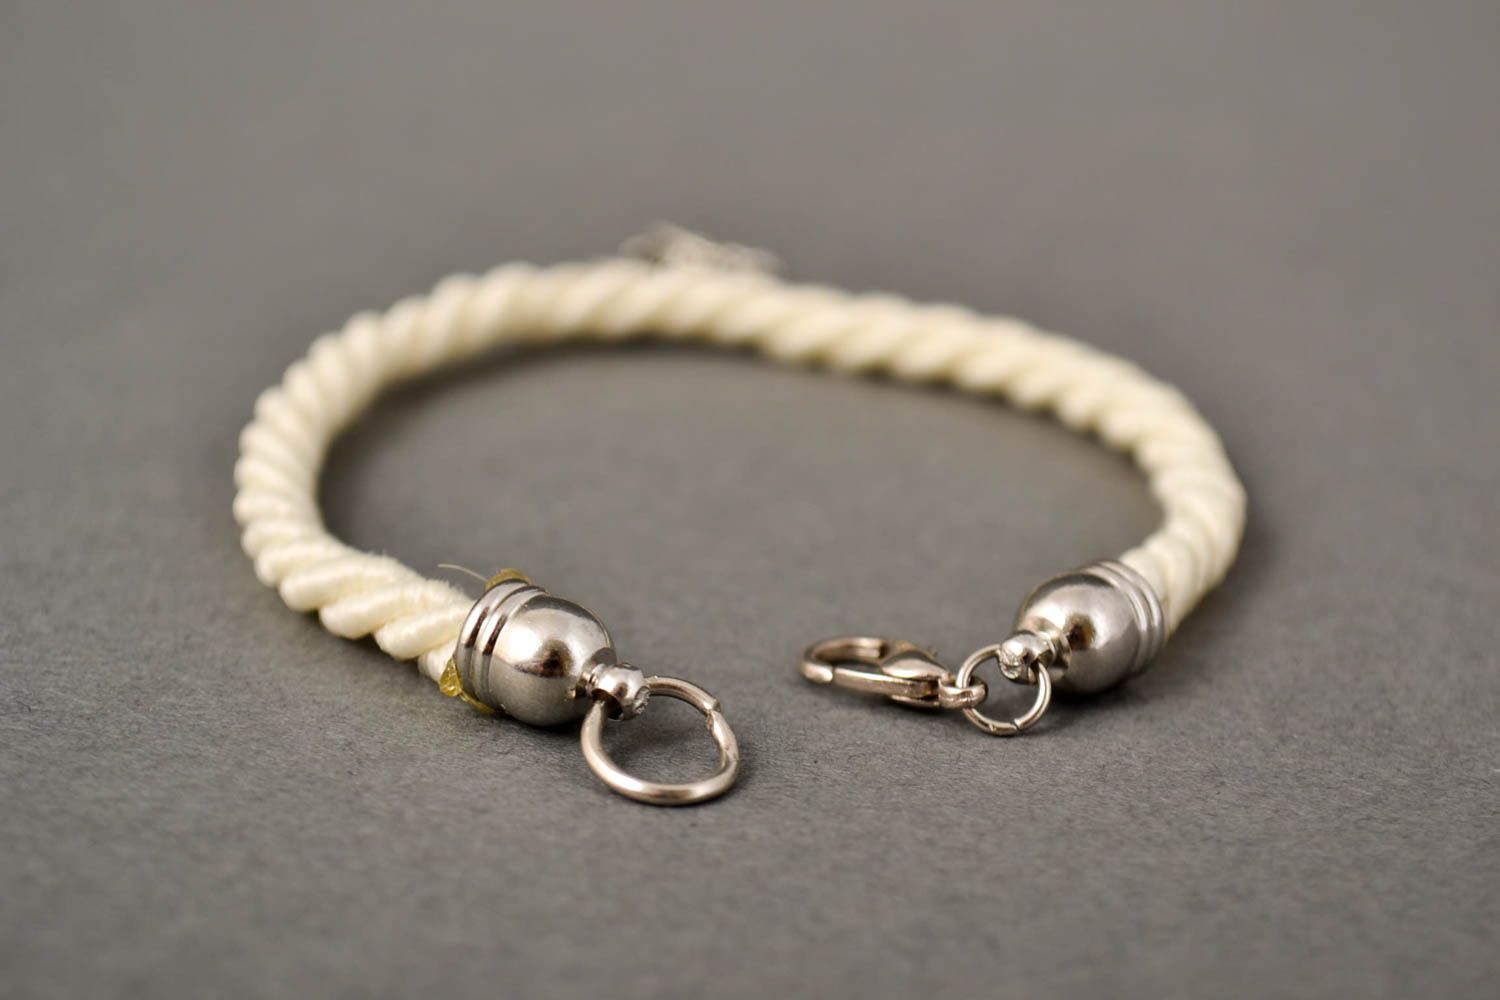 String bracelet handmade jewelry wrist bracelet charm bracelet gifts for girls photo 3